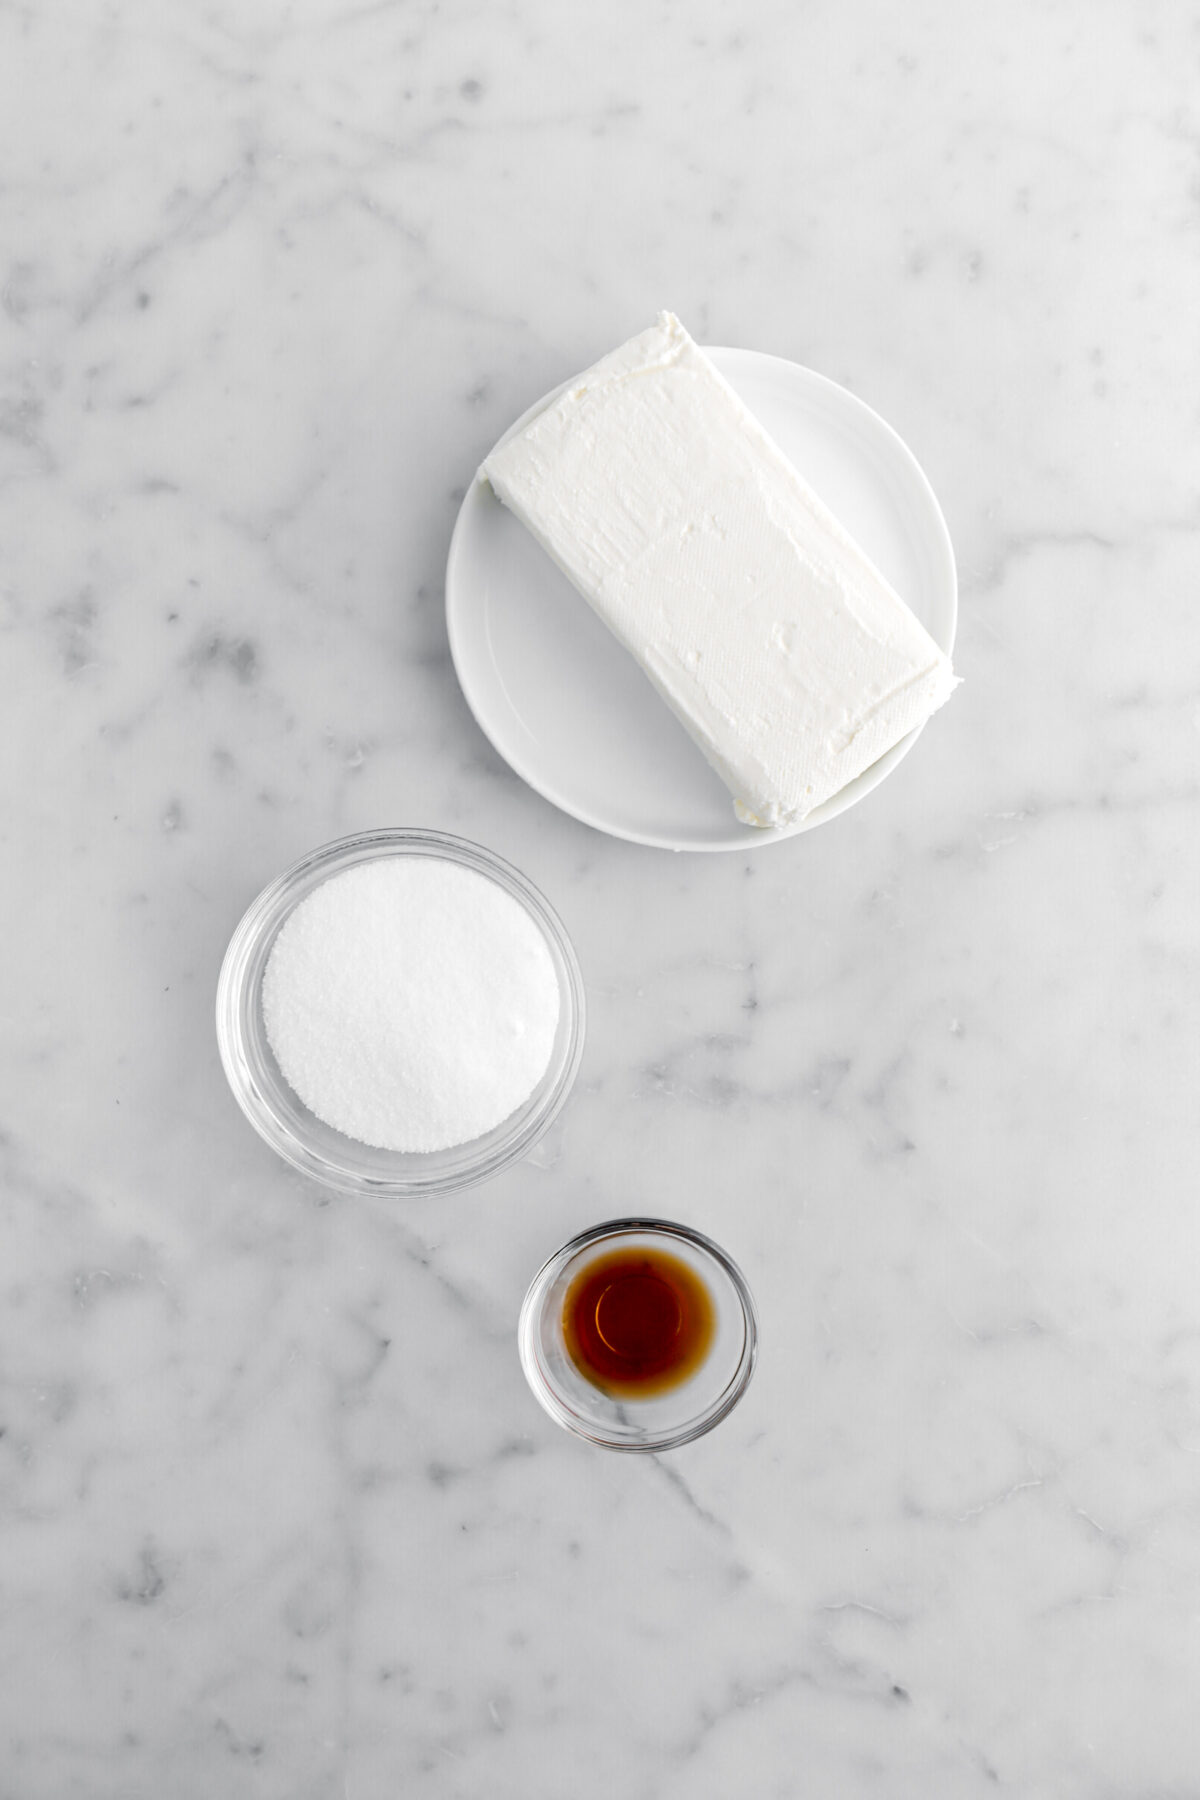 cream cheese, sugar, and vanilla on marble surface.